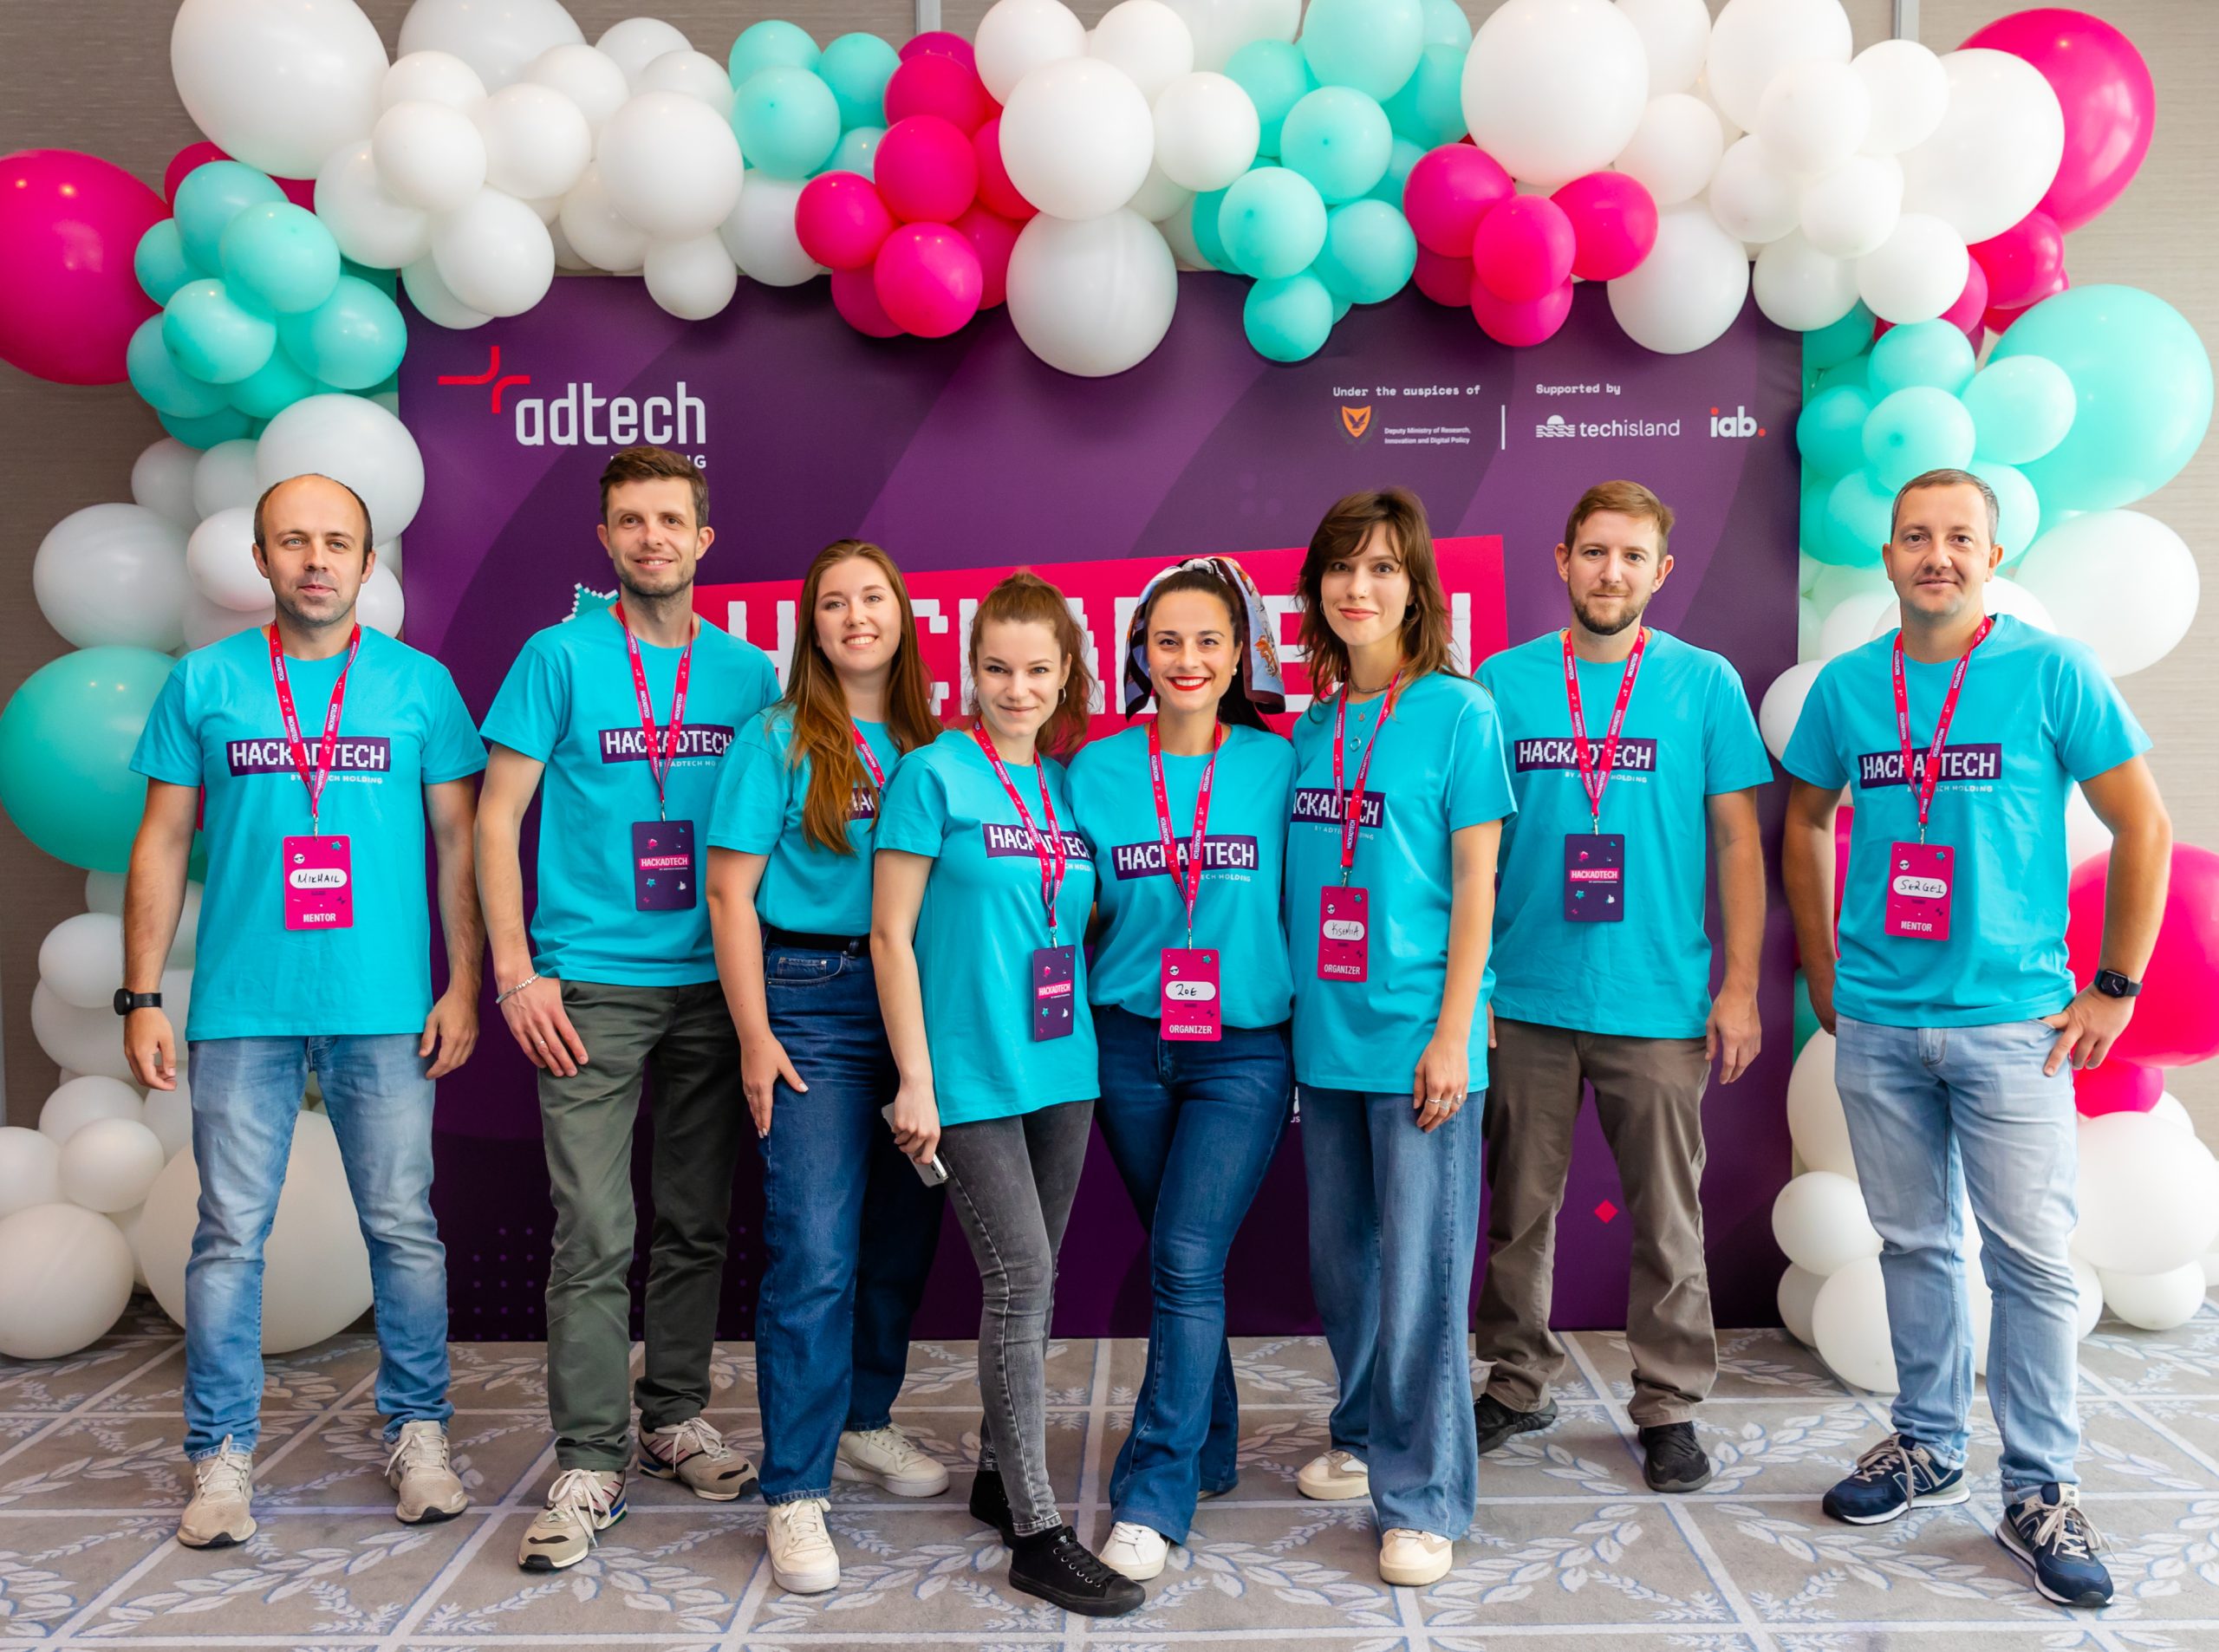 Adtech-hackathon-hackadtech23-our-team